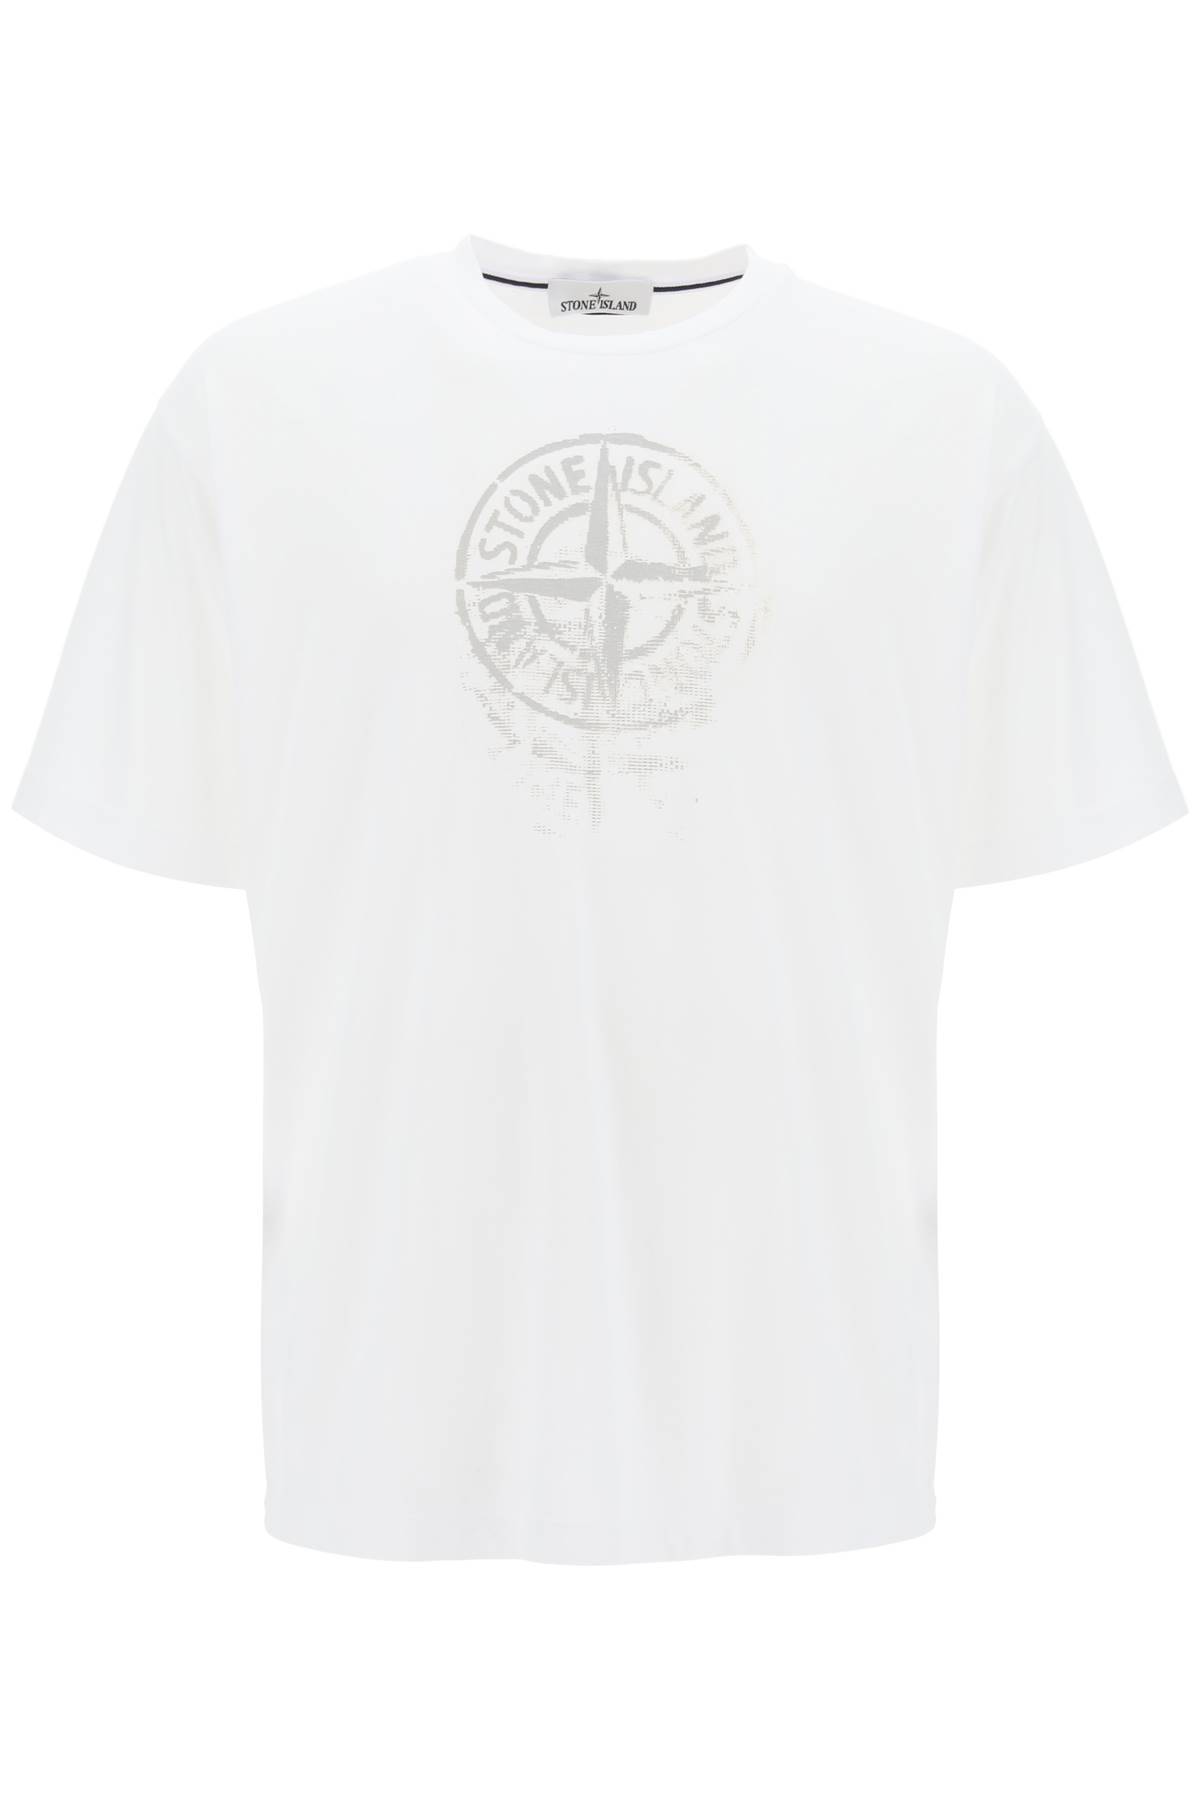 Stone Island STONE ISLAND t-shirt with reflective print